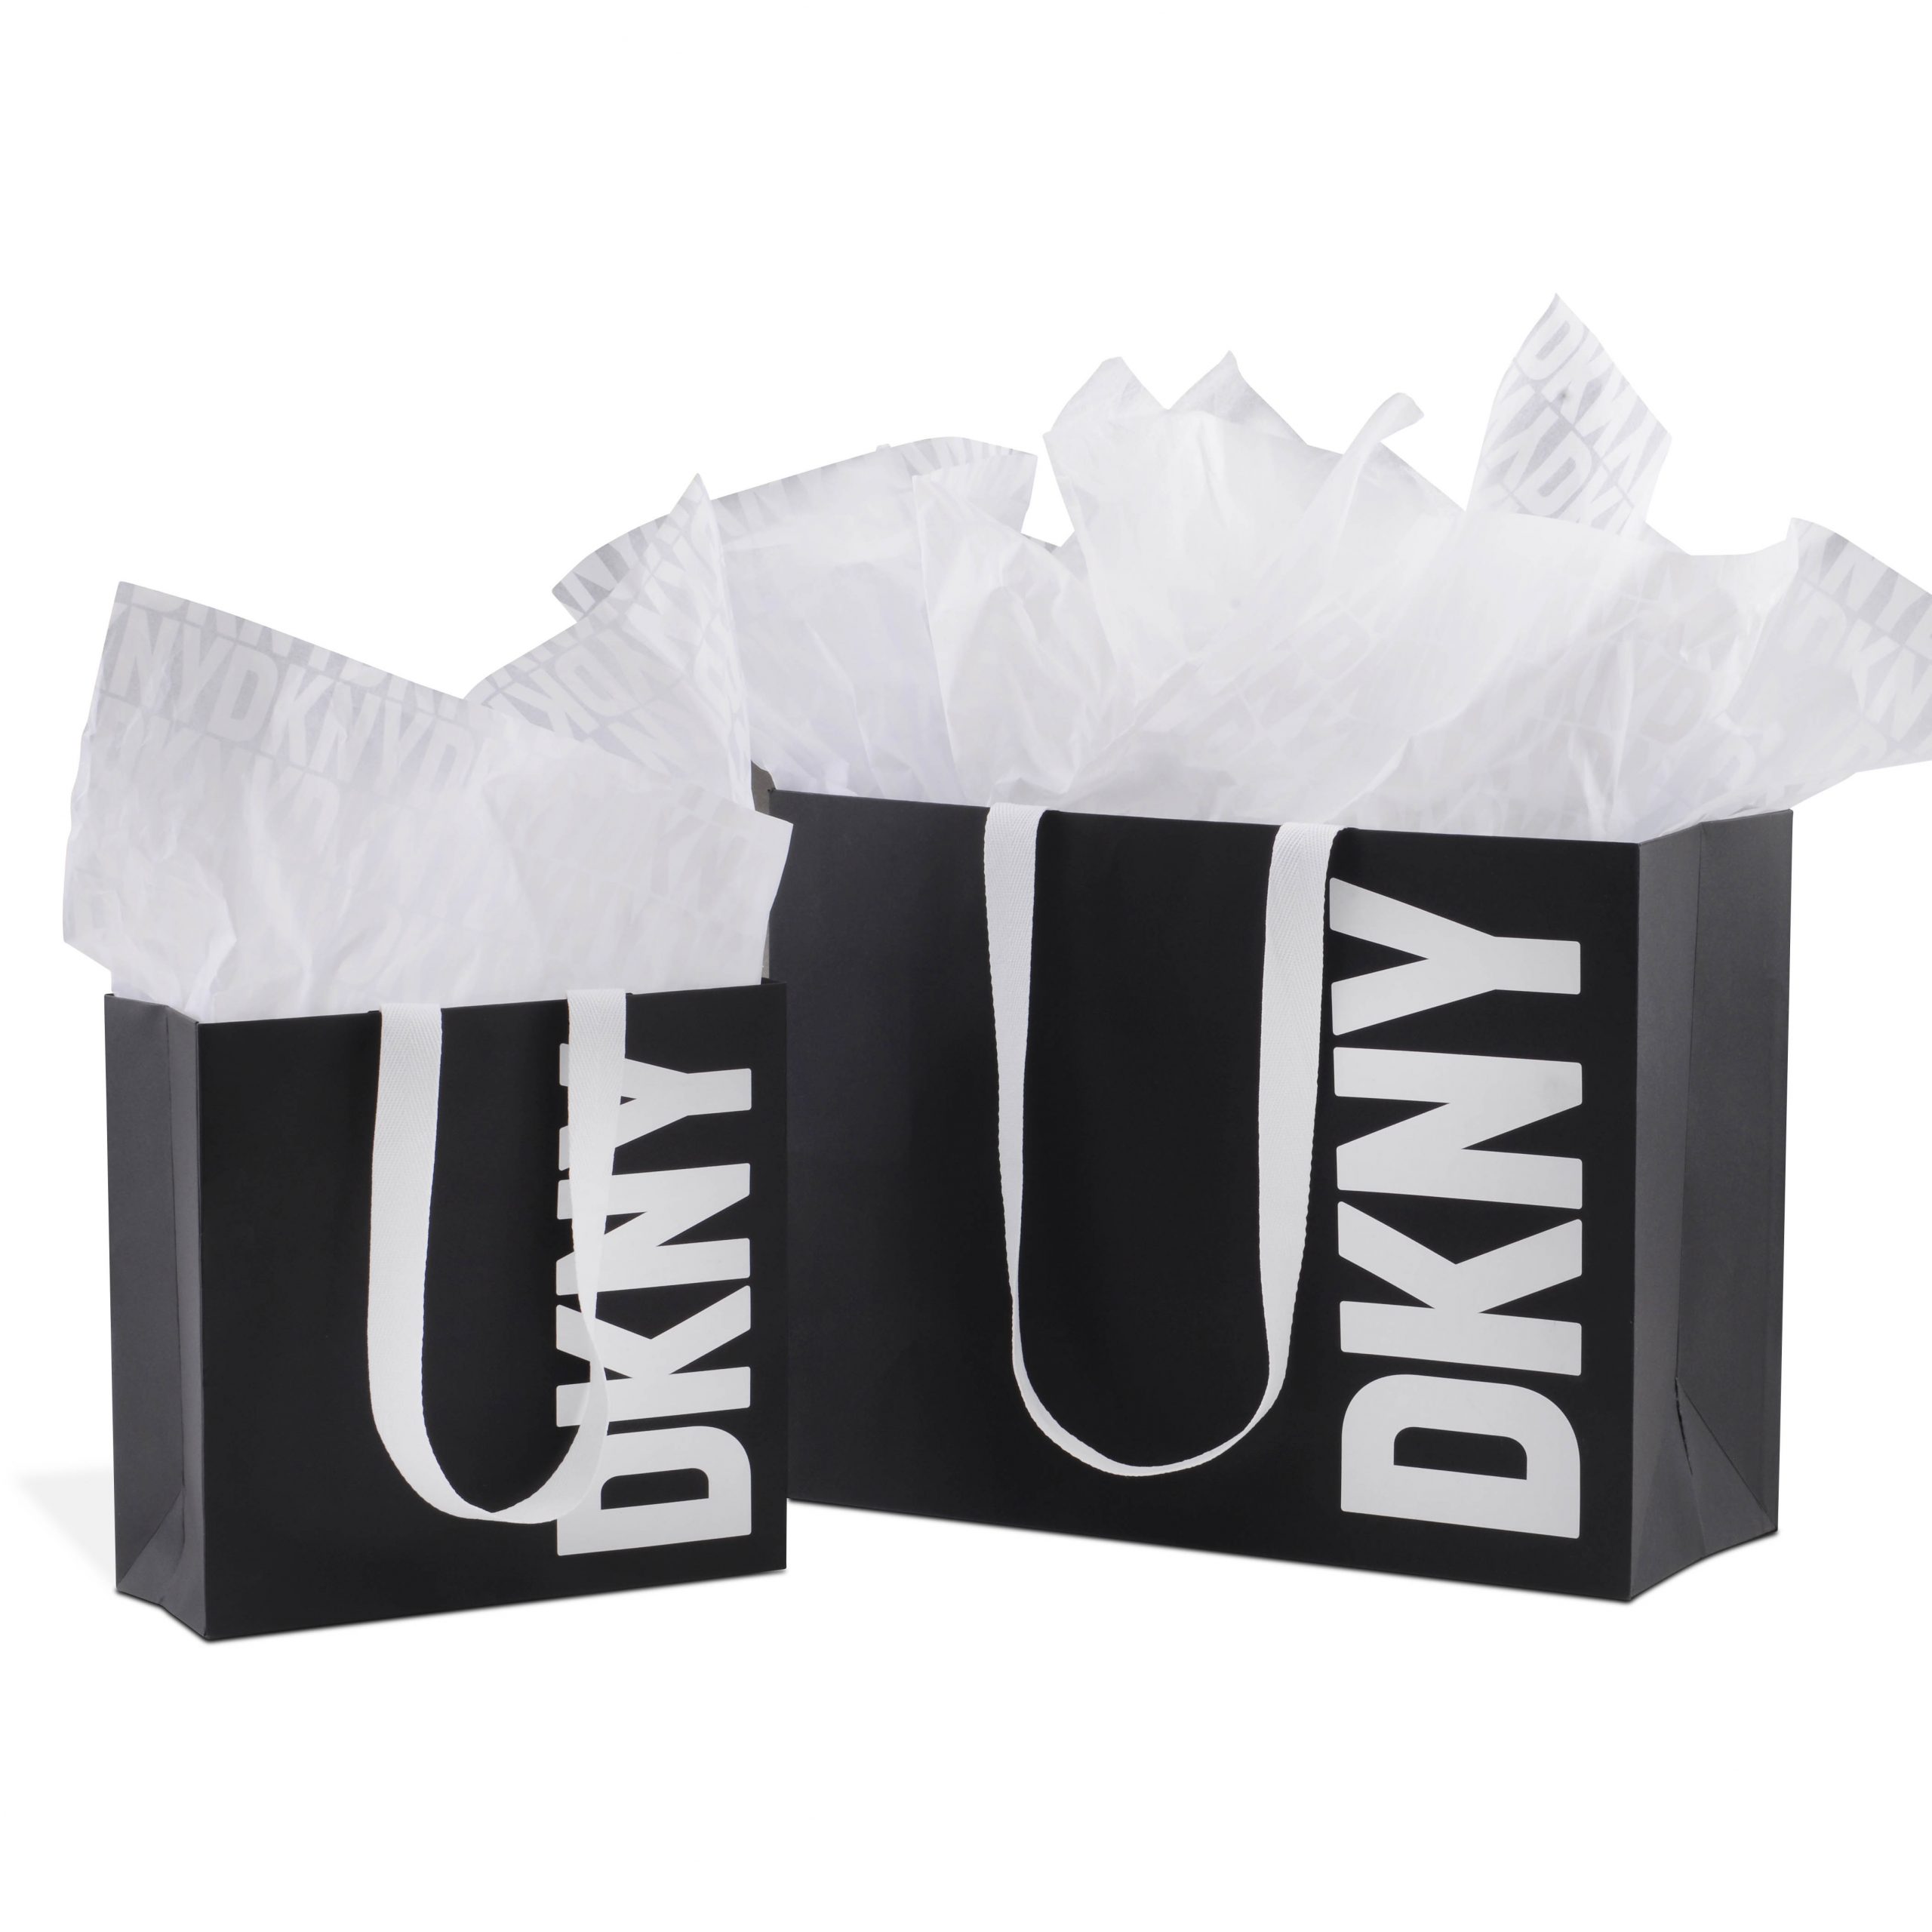 Prime Line Packaging Black Colored Kraft Paper Bags with Handles